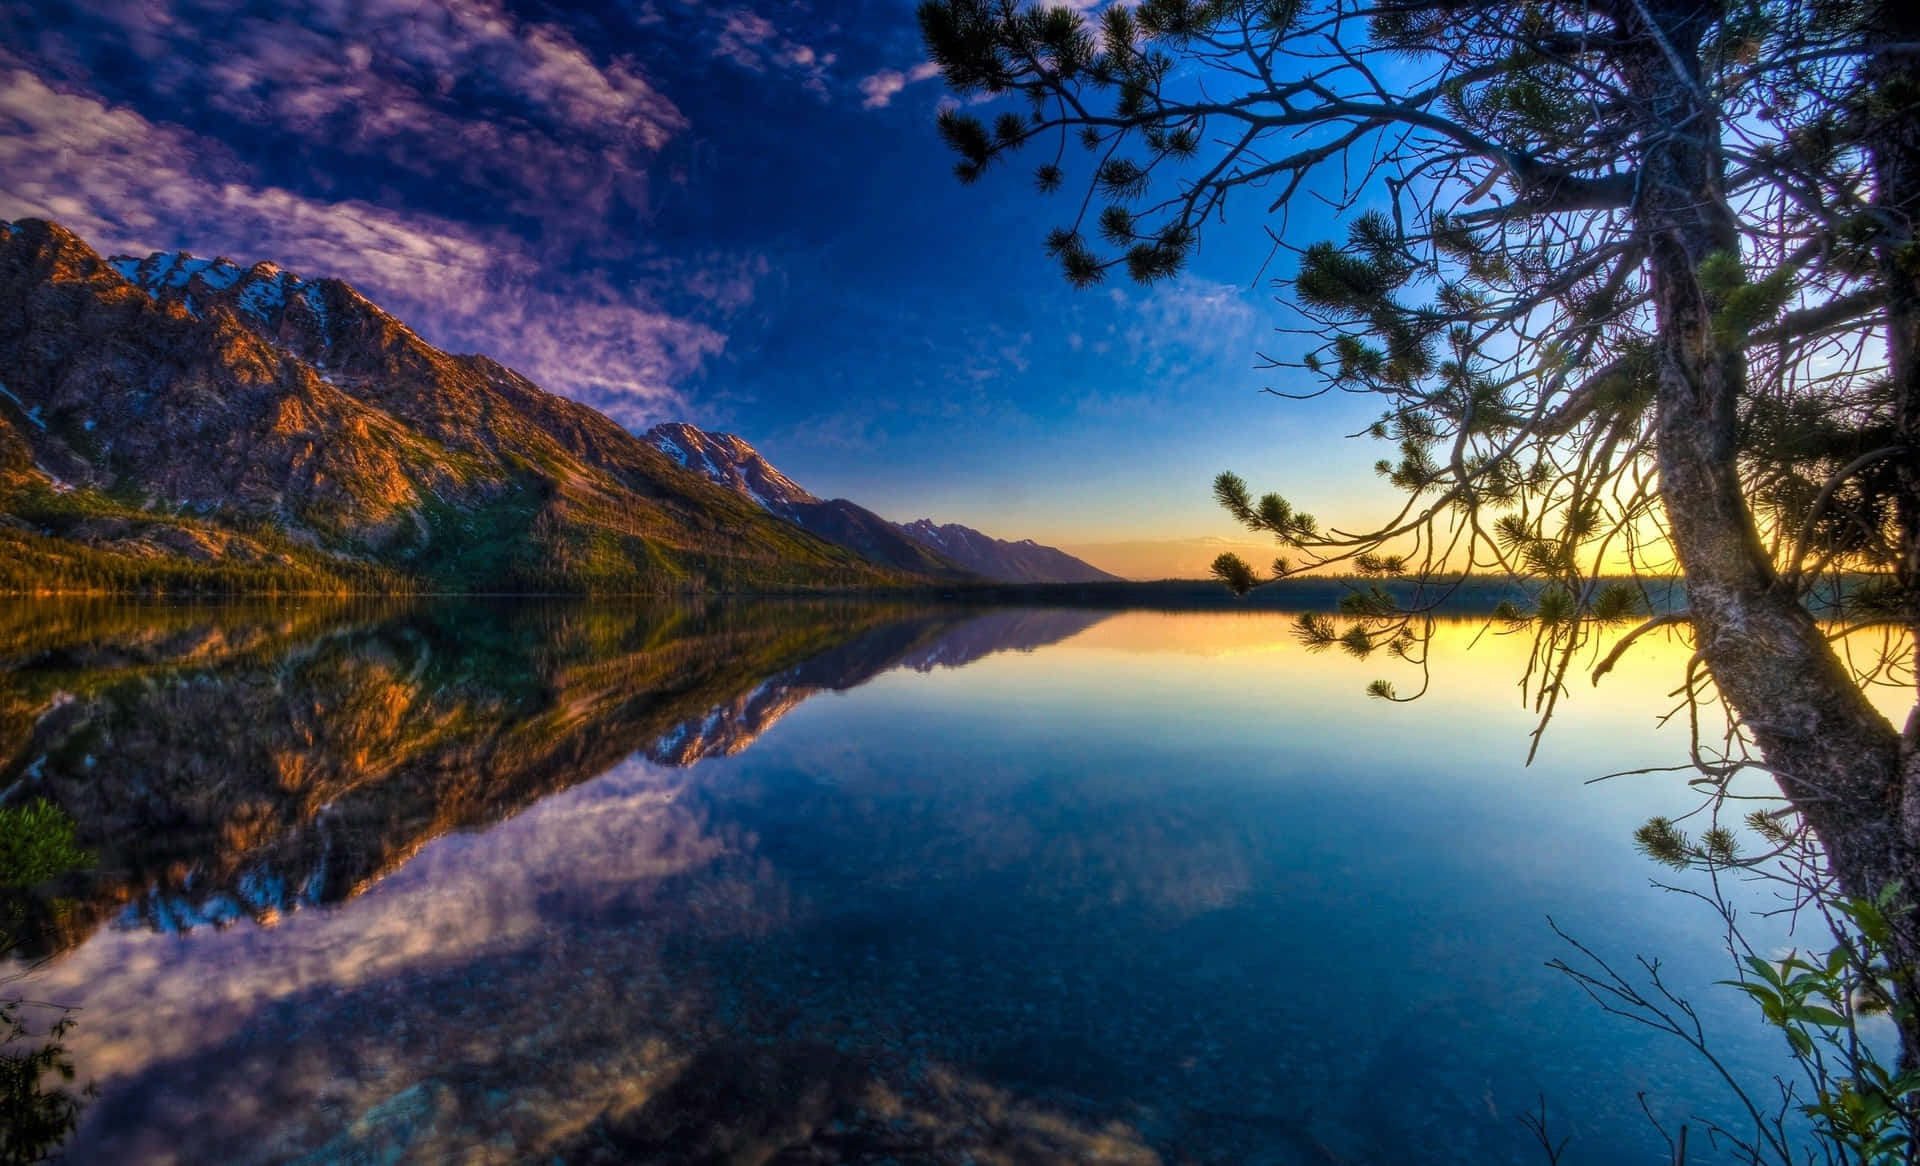 Enjoy the calming views of a beautiful lake. Wallpaper